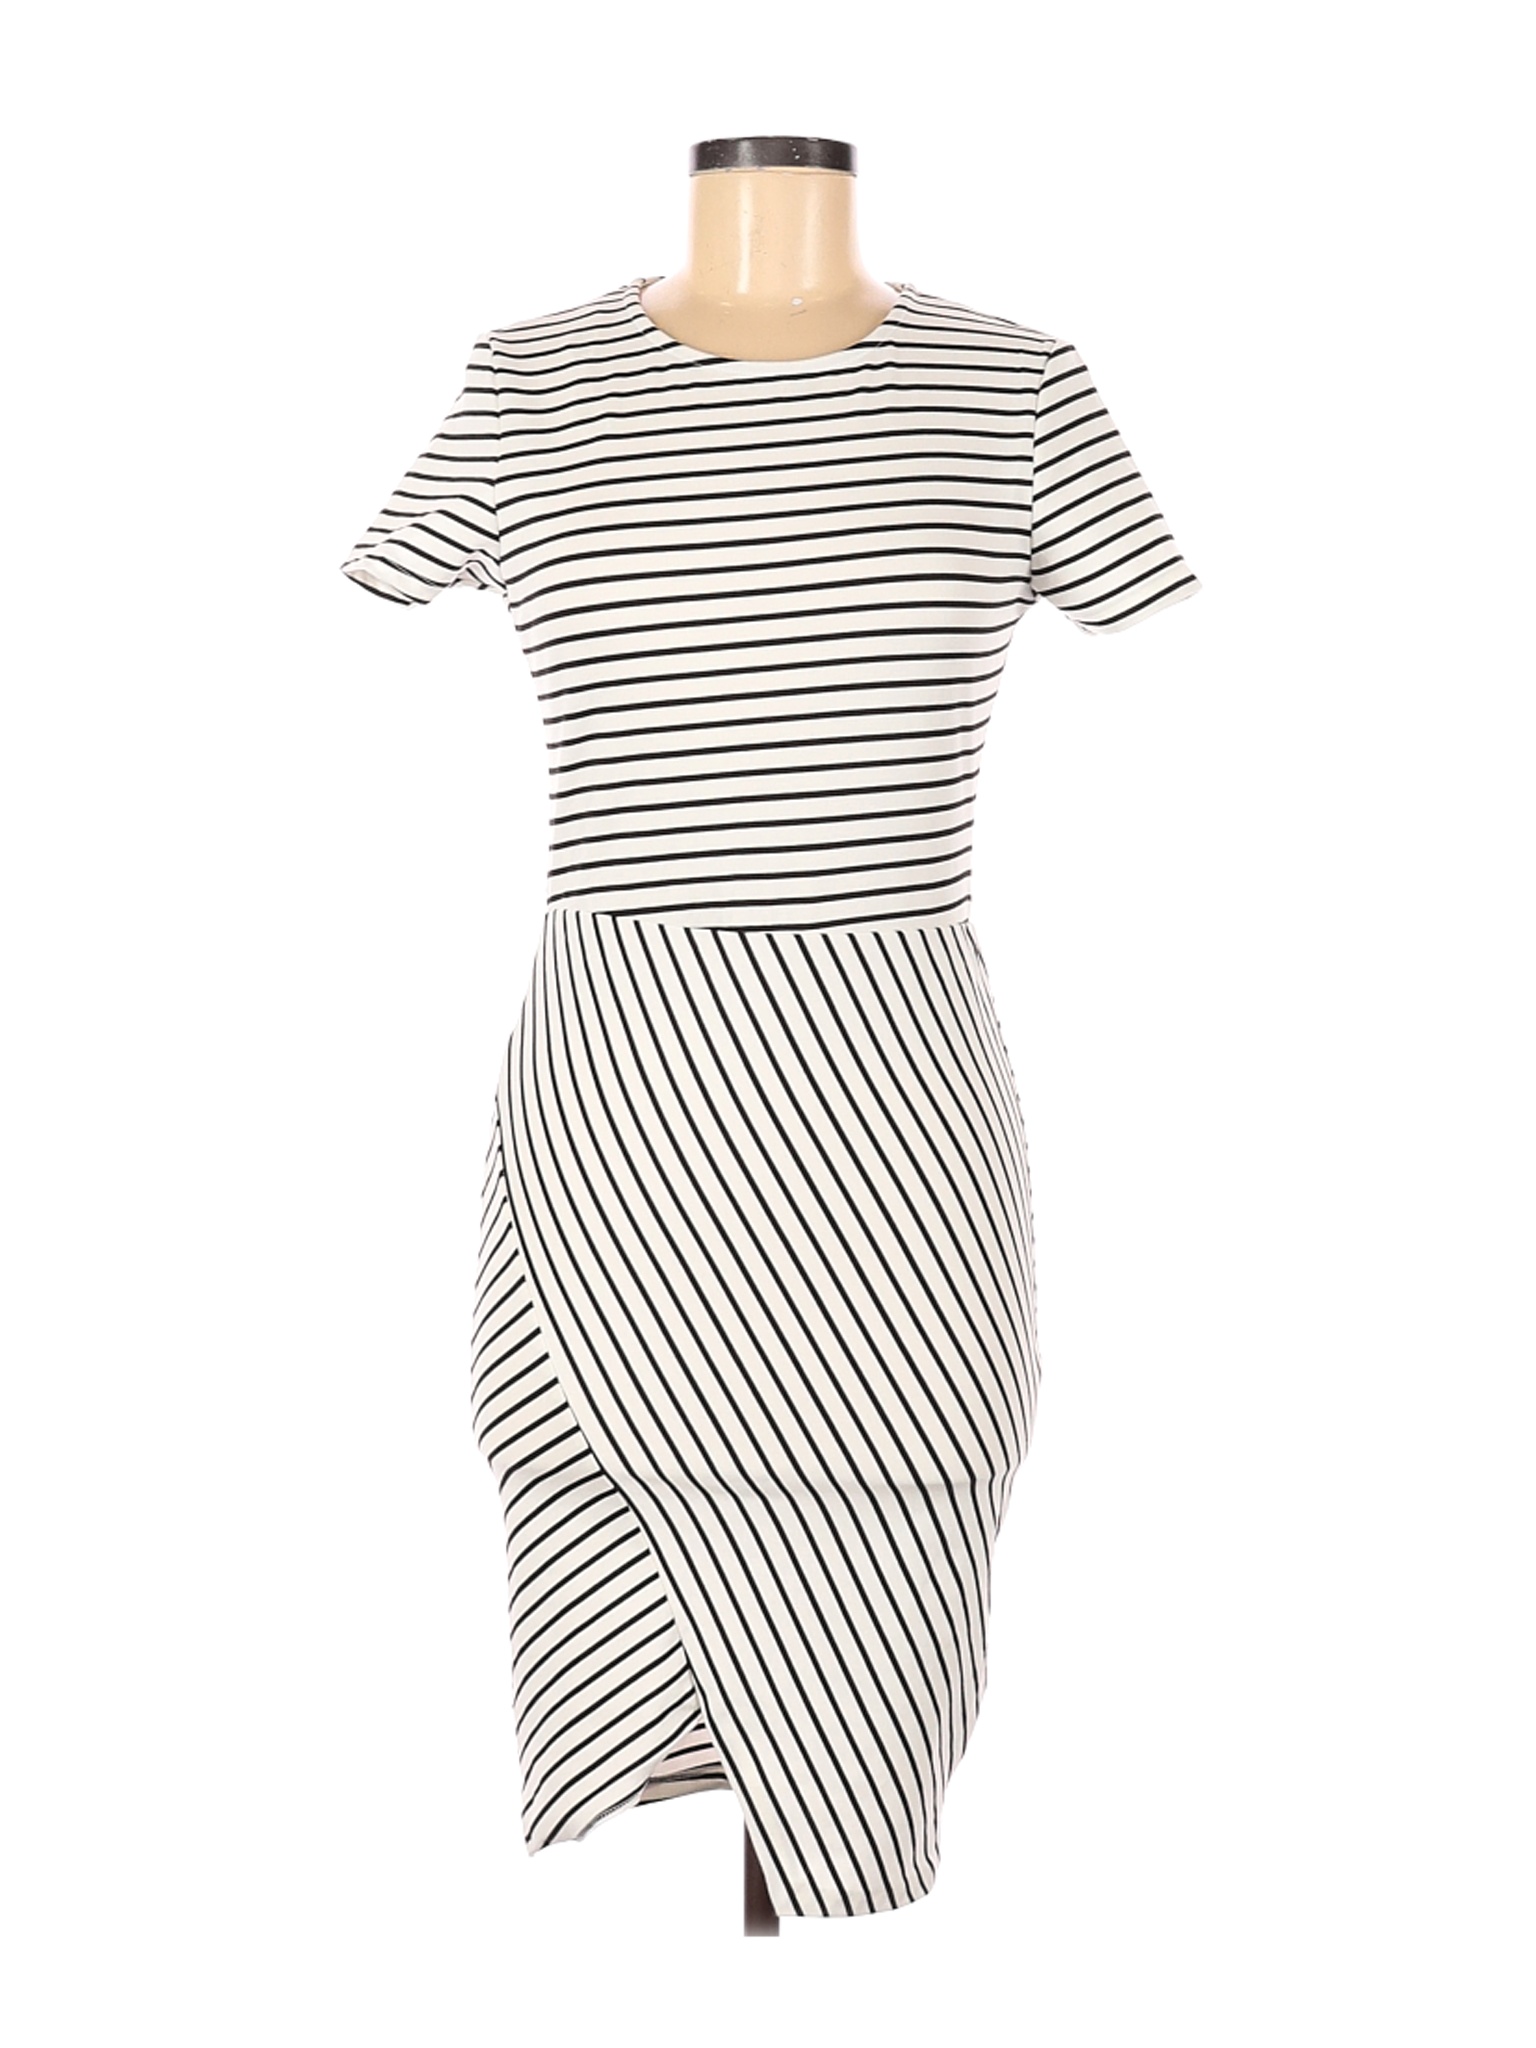 Trafaluc by Zara Women White Casual Dress M | eBay